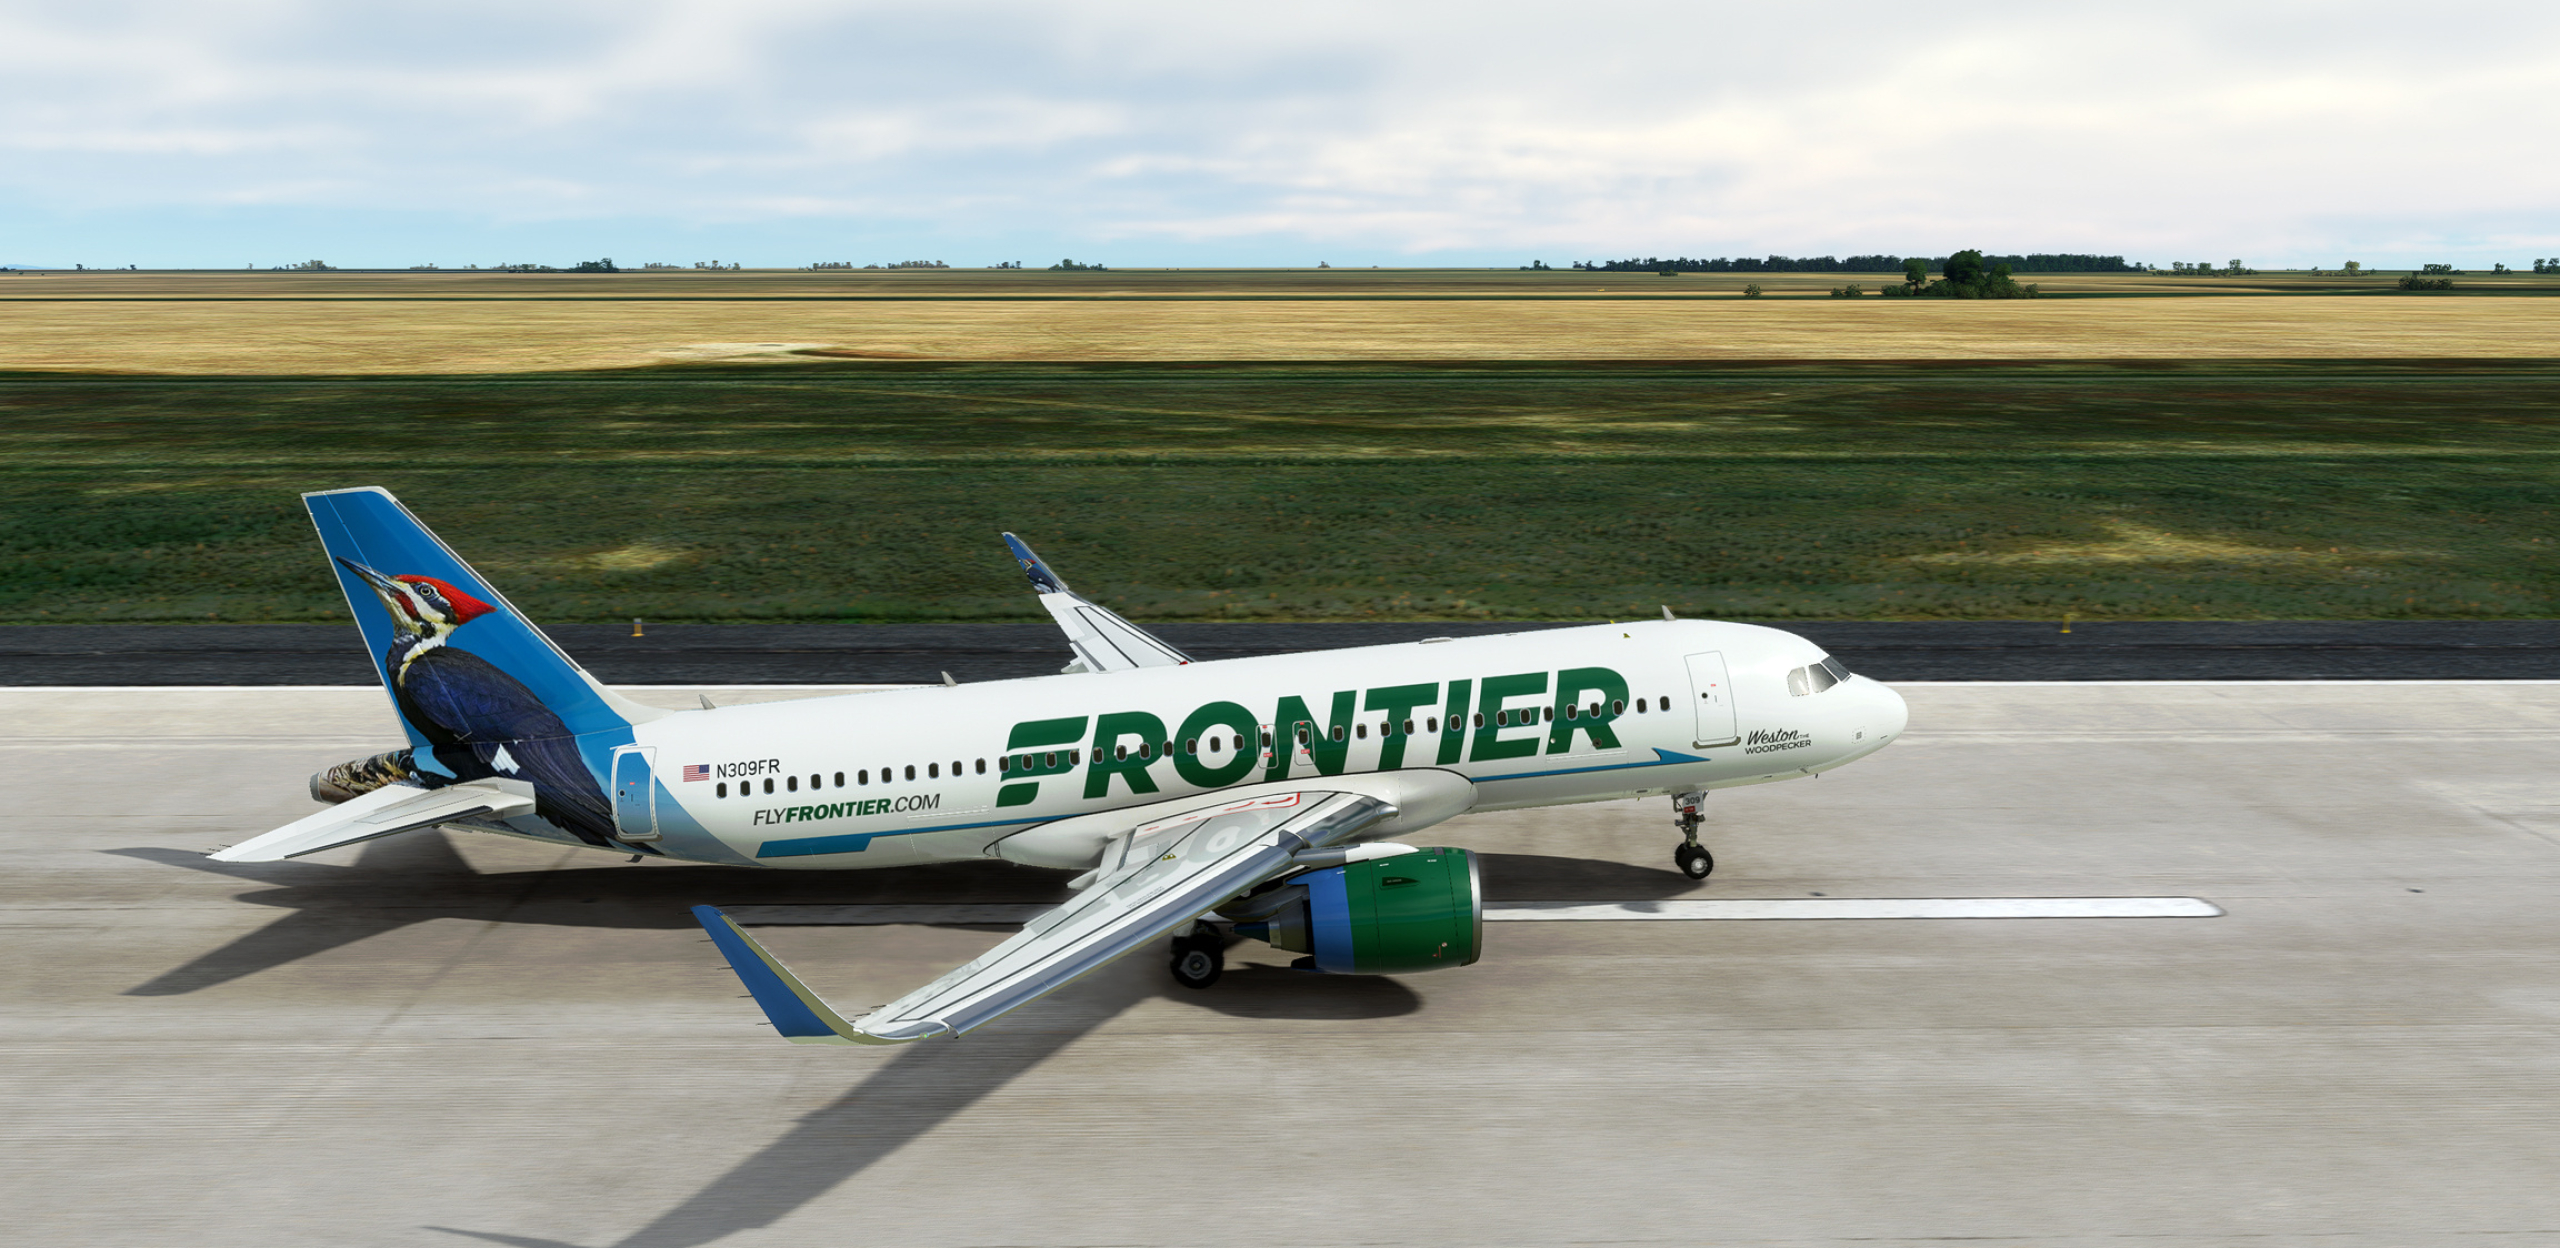 Frontier Airlines, Airline journey, Blue skies, Adventure awaits, 2560x1250 Dual Screen Desktop